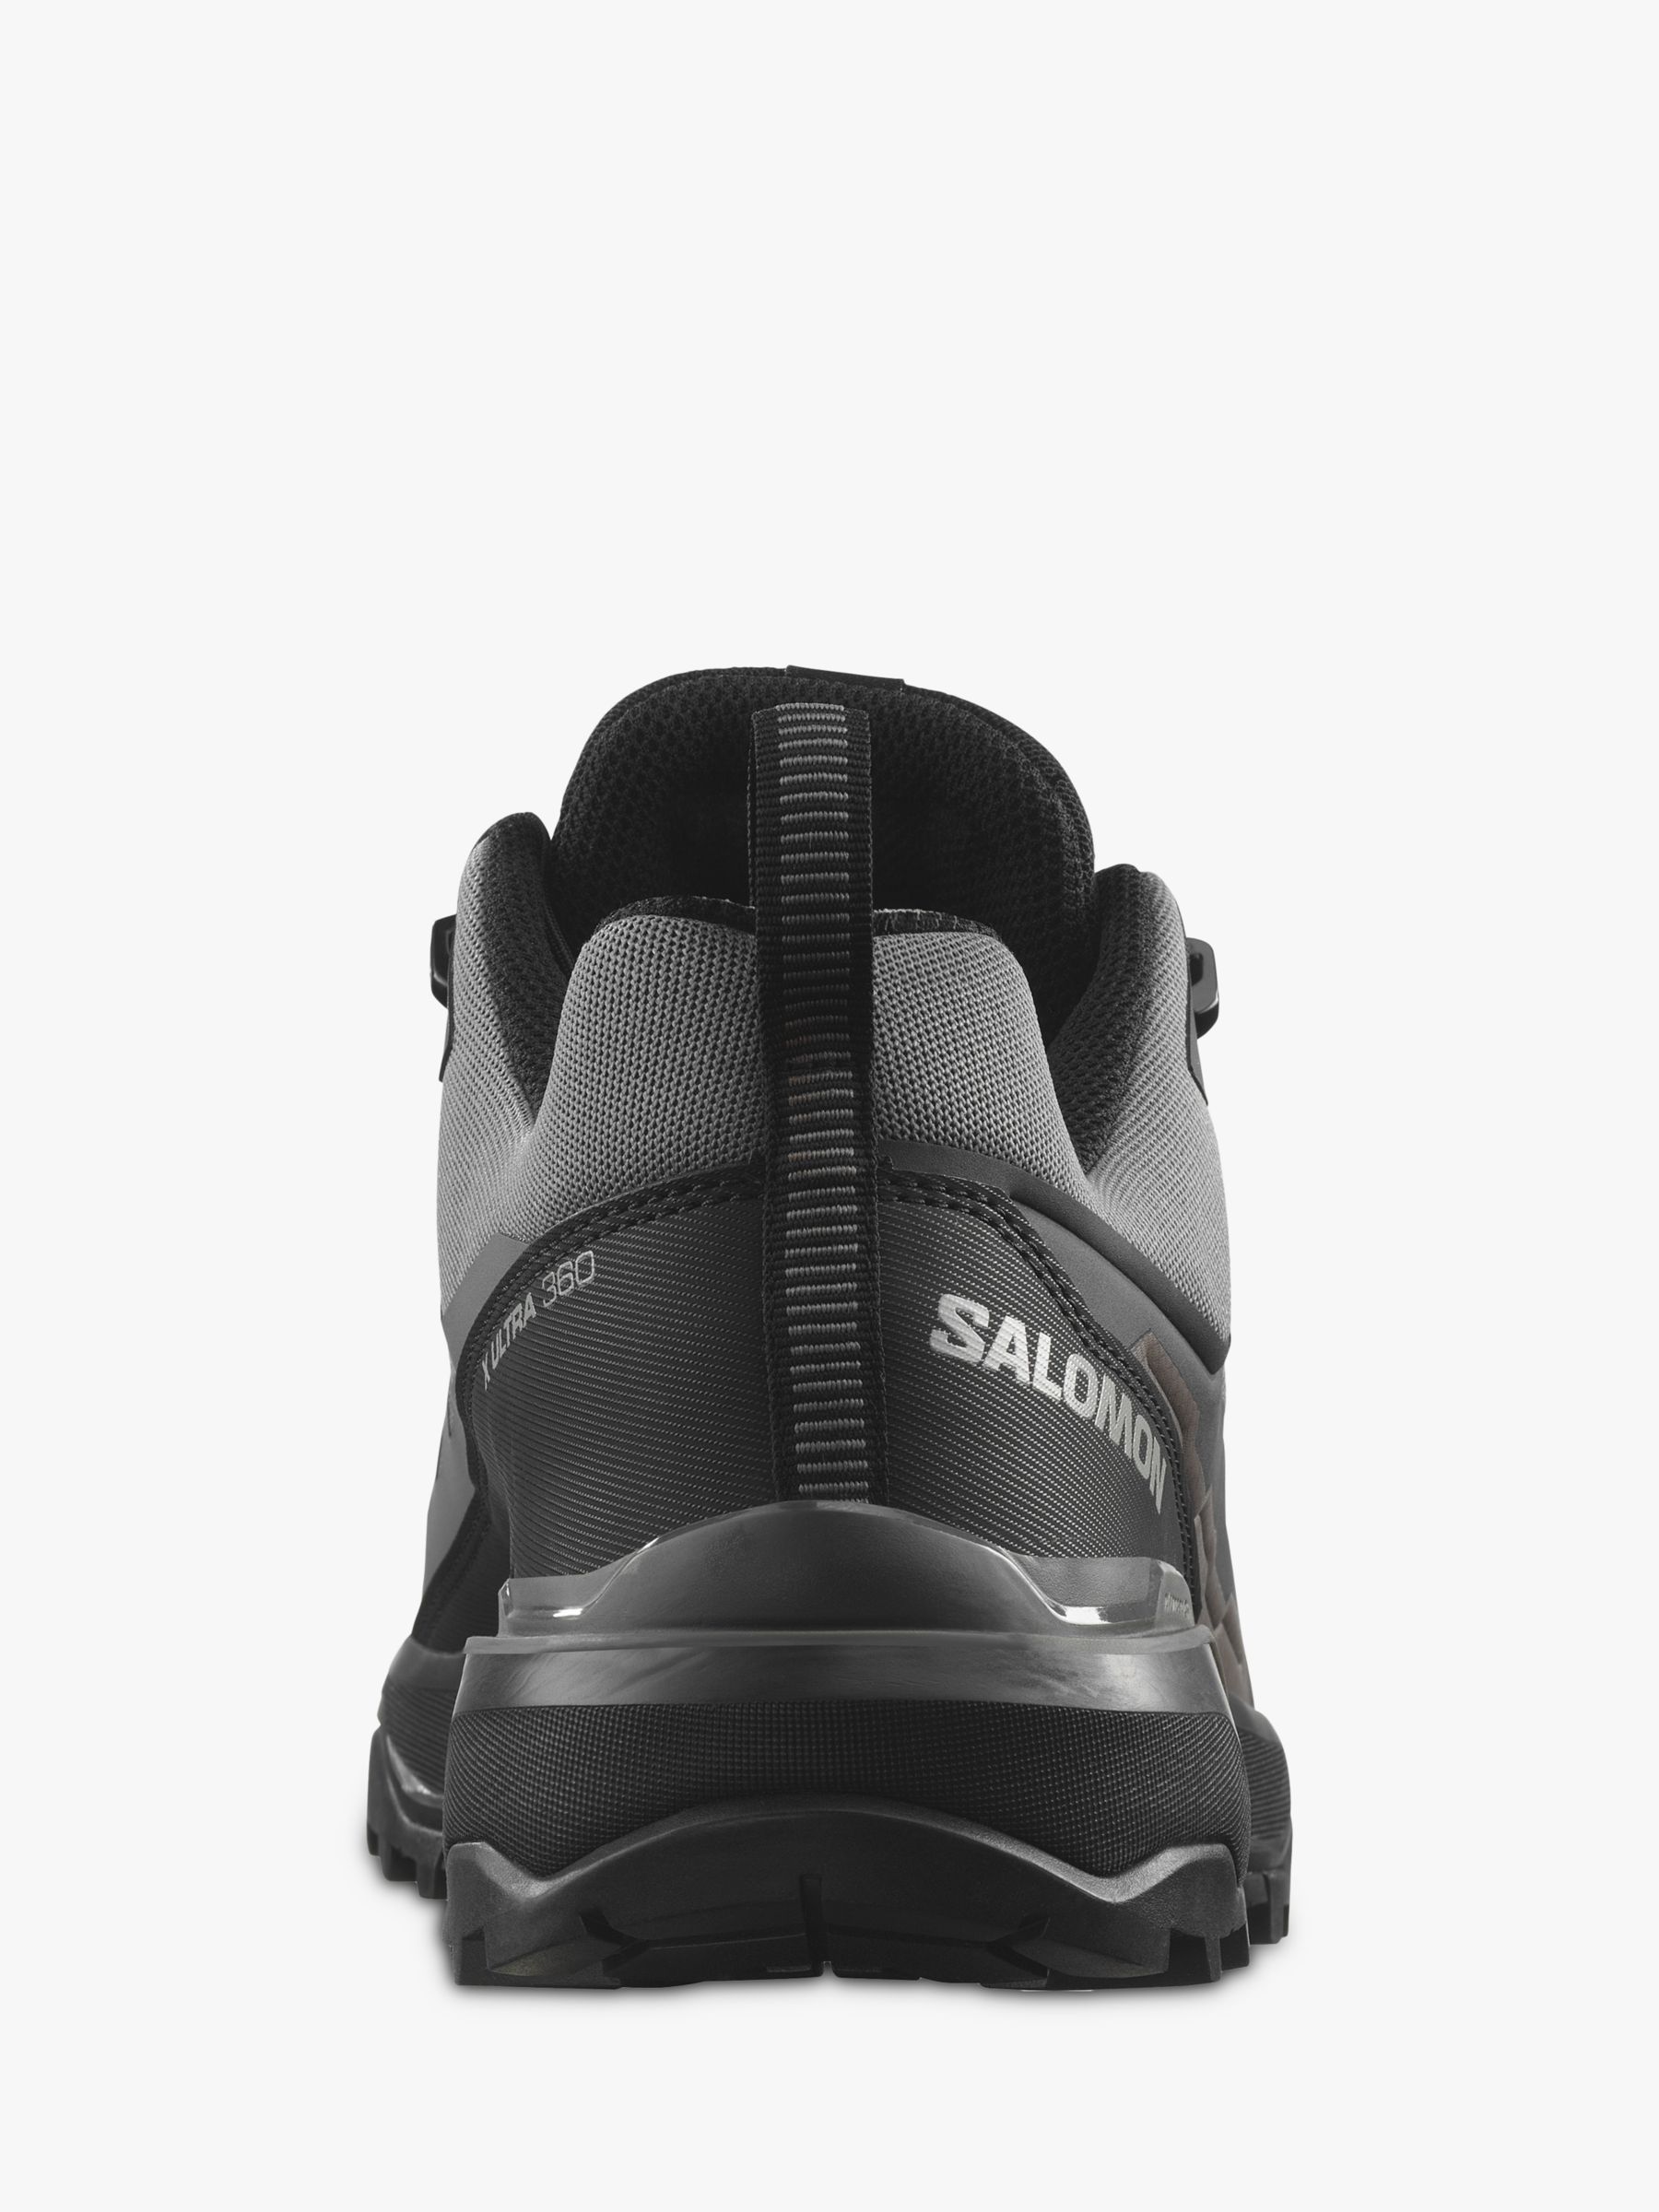 Salomon X Ultra 360 Men's Hiking Shoes, Magnet/Black, 7